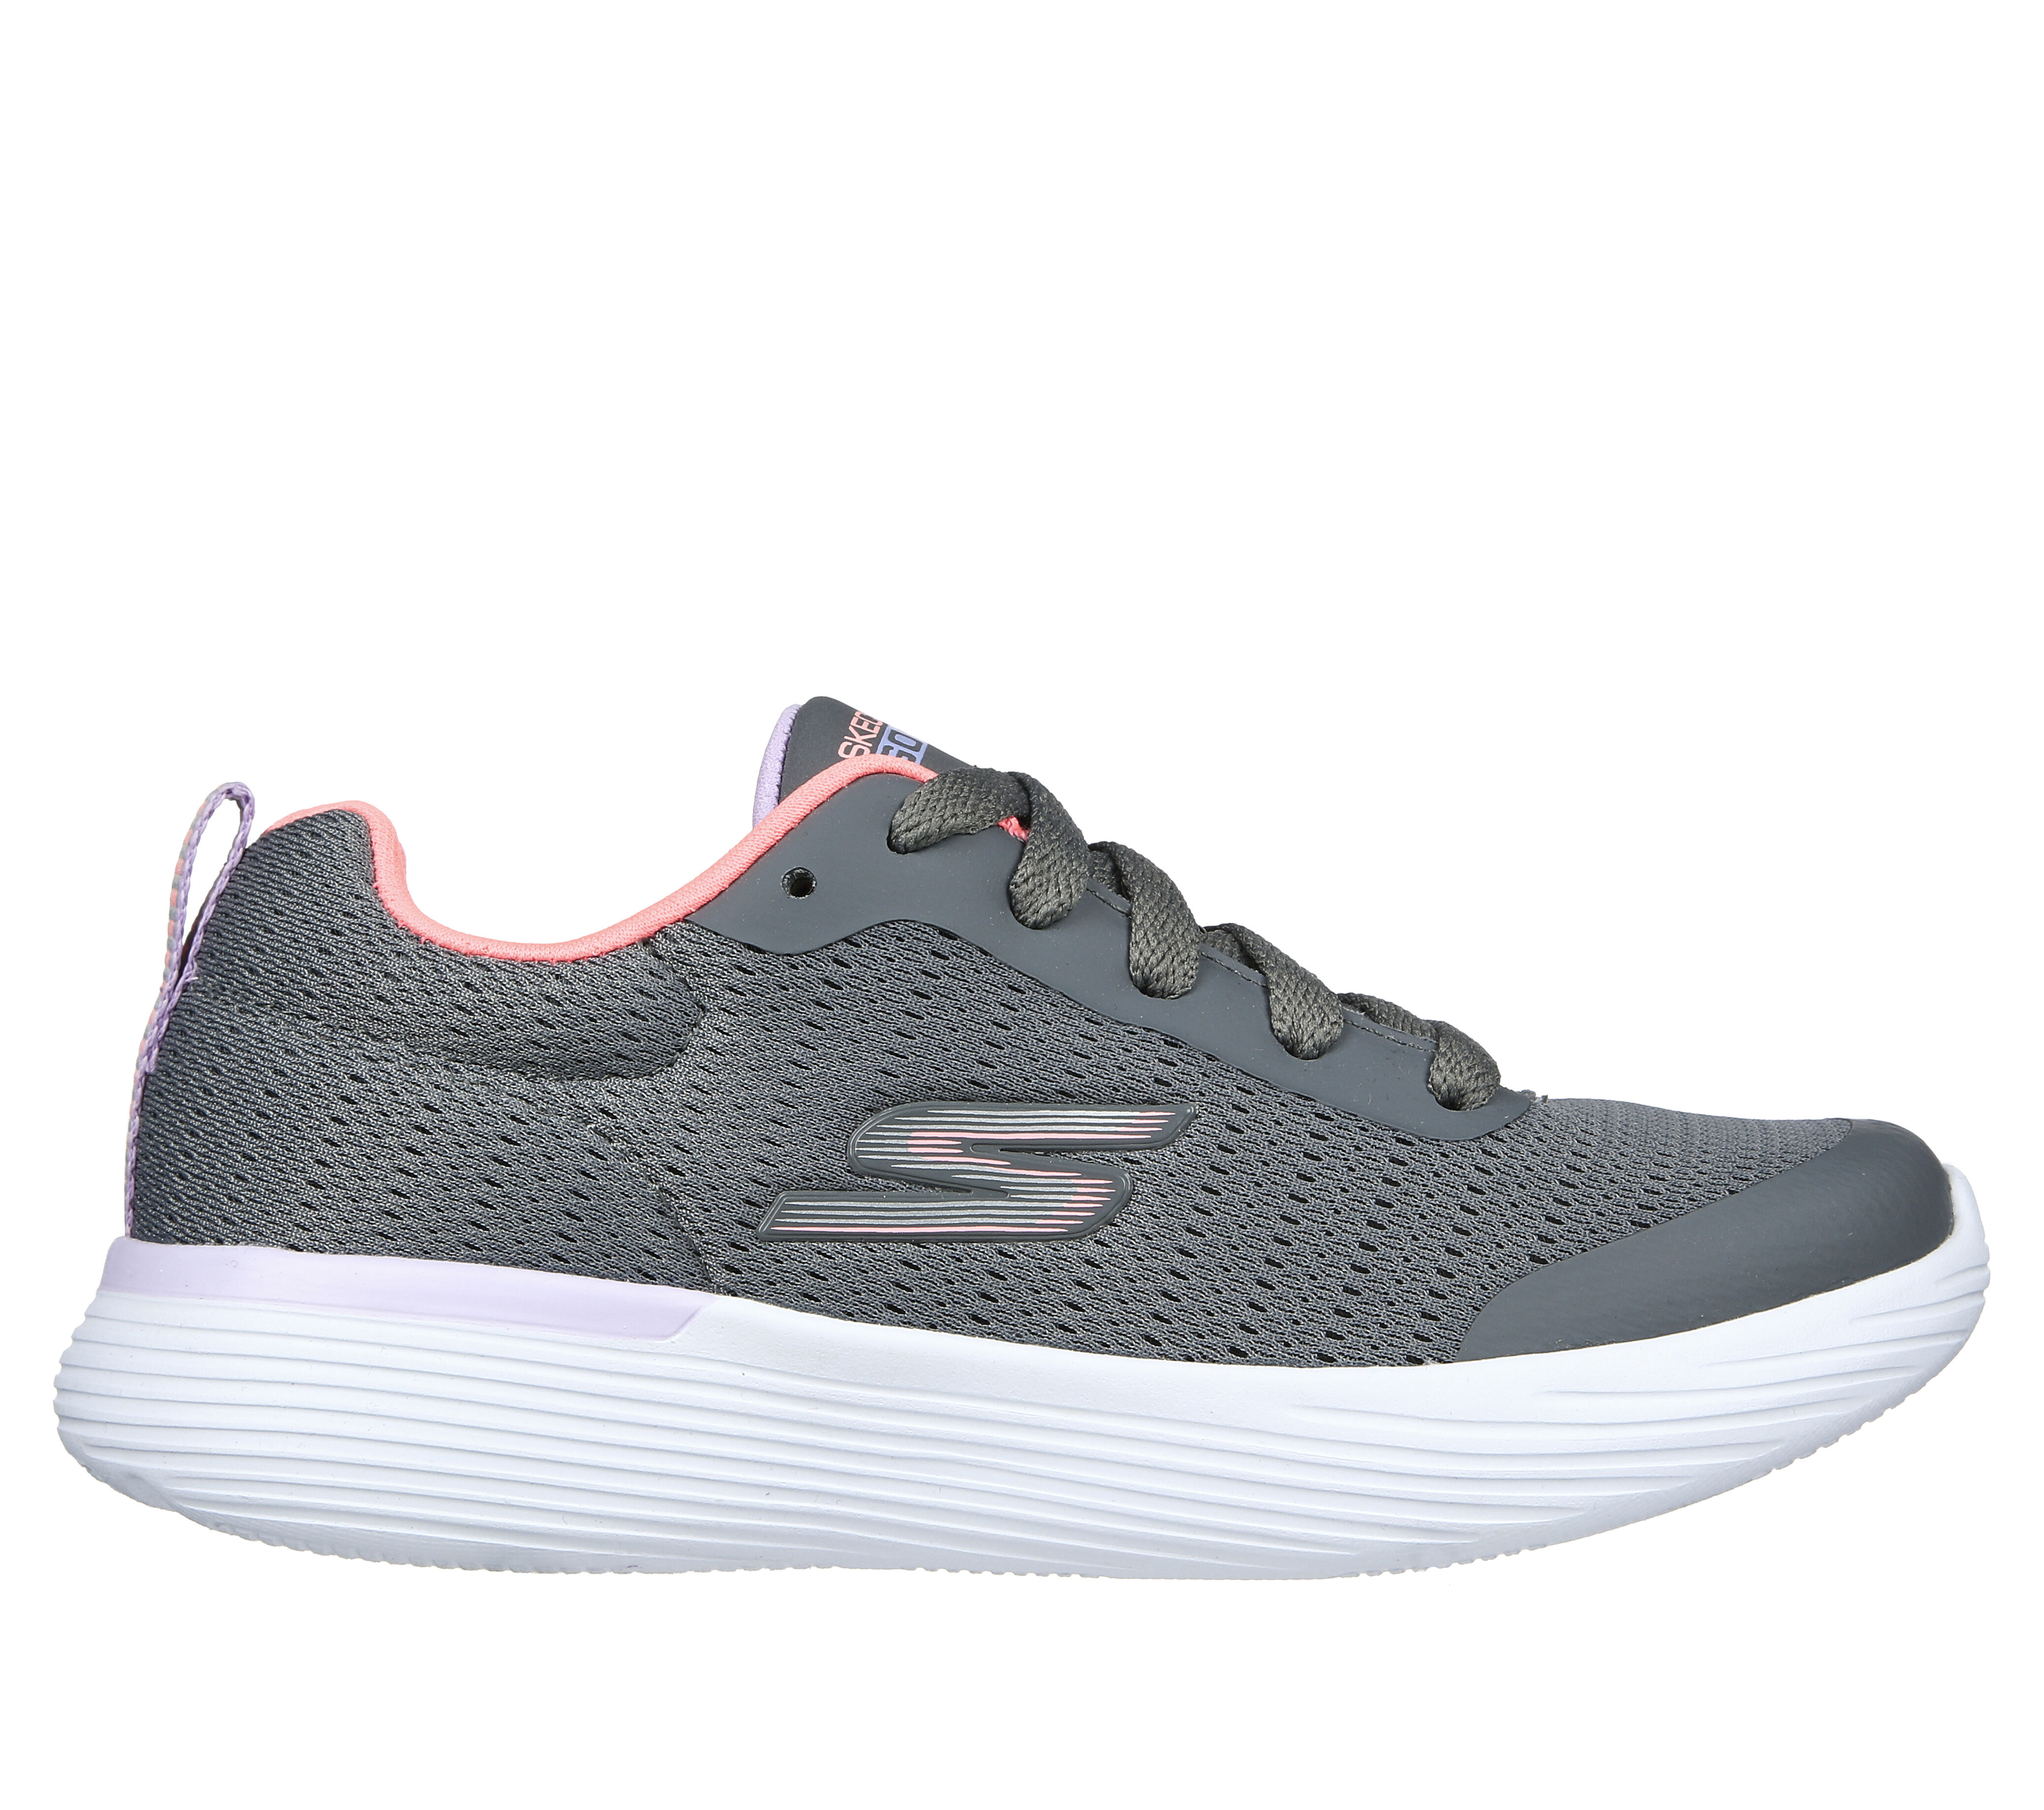 Skechers GOrun 400 V2 - Basic Edge Charcoal / Pink - Size 11.0